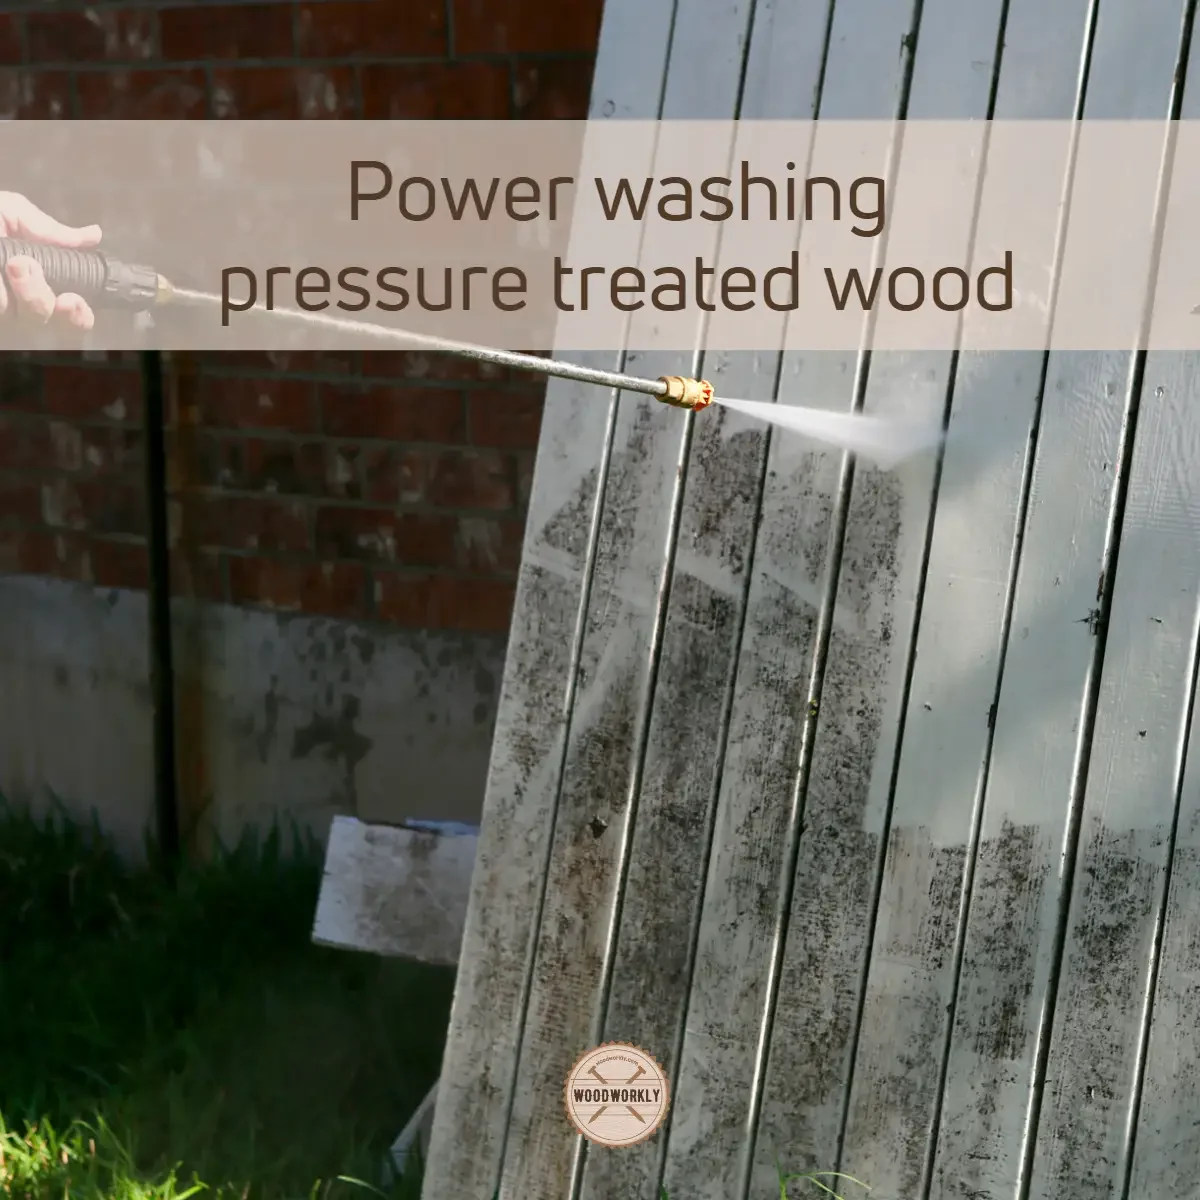 Power washing pressure treated wood